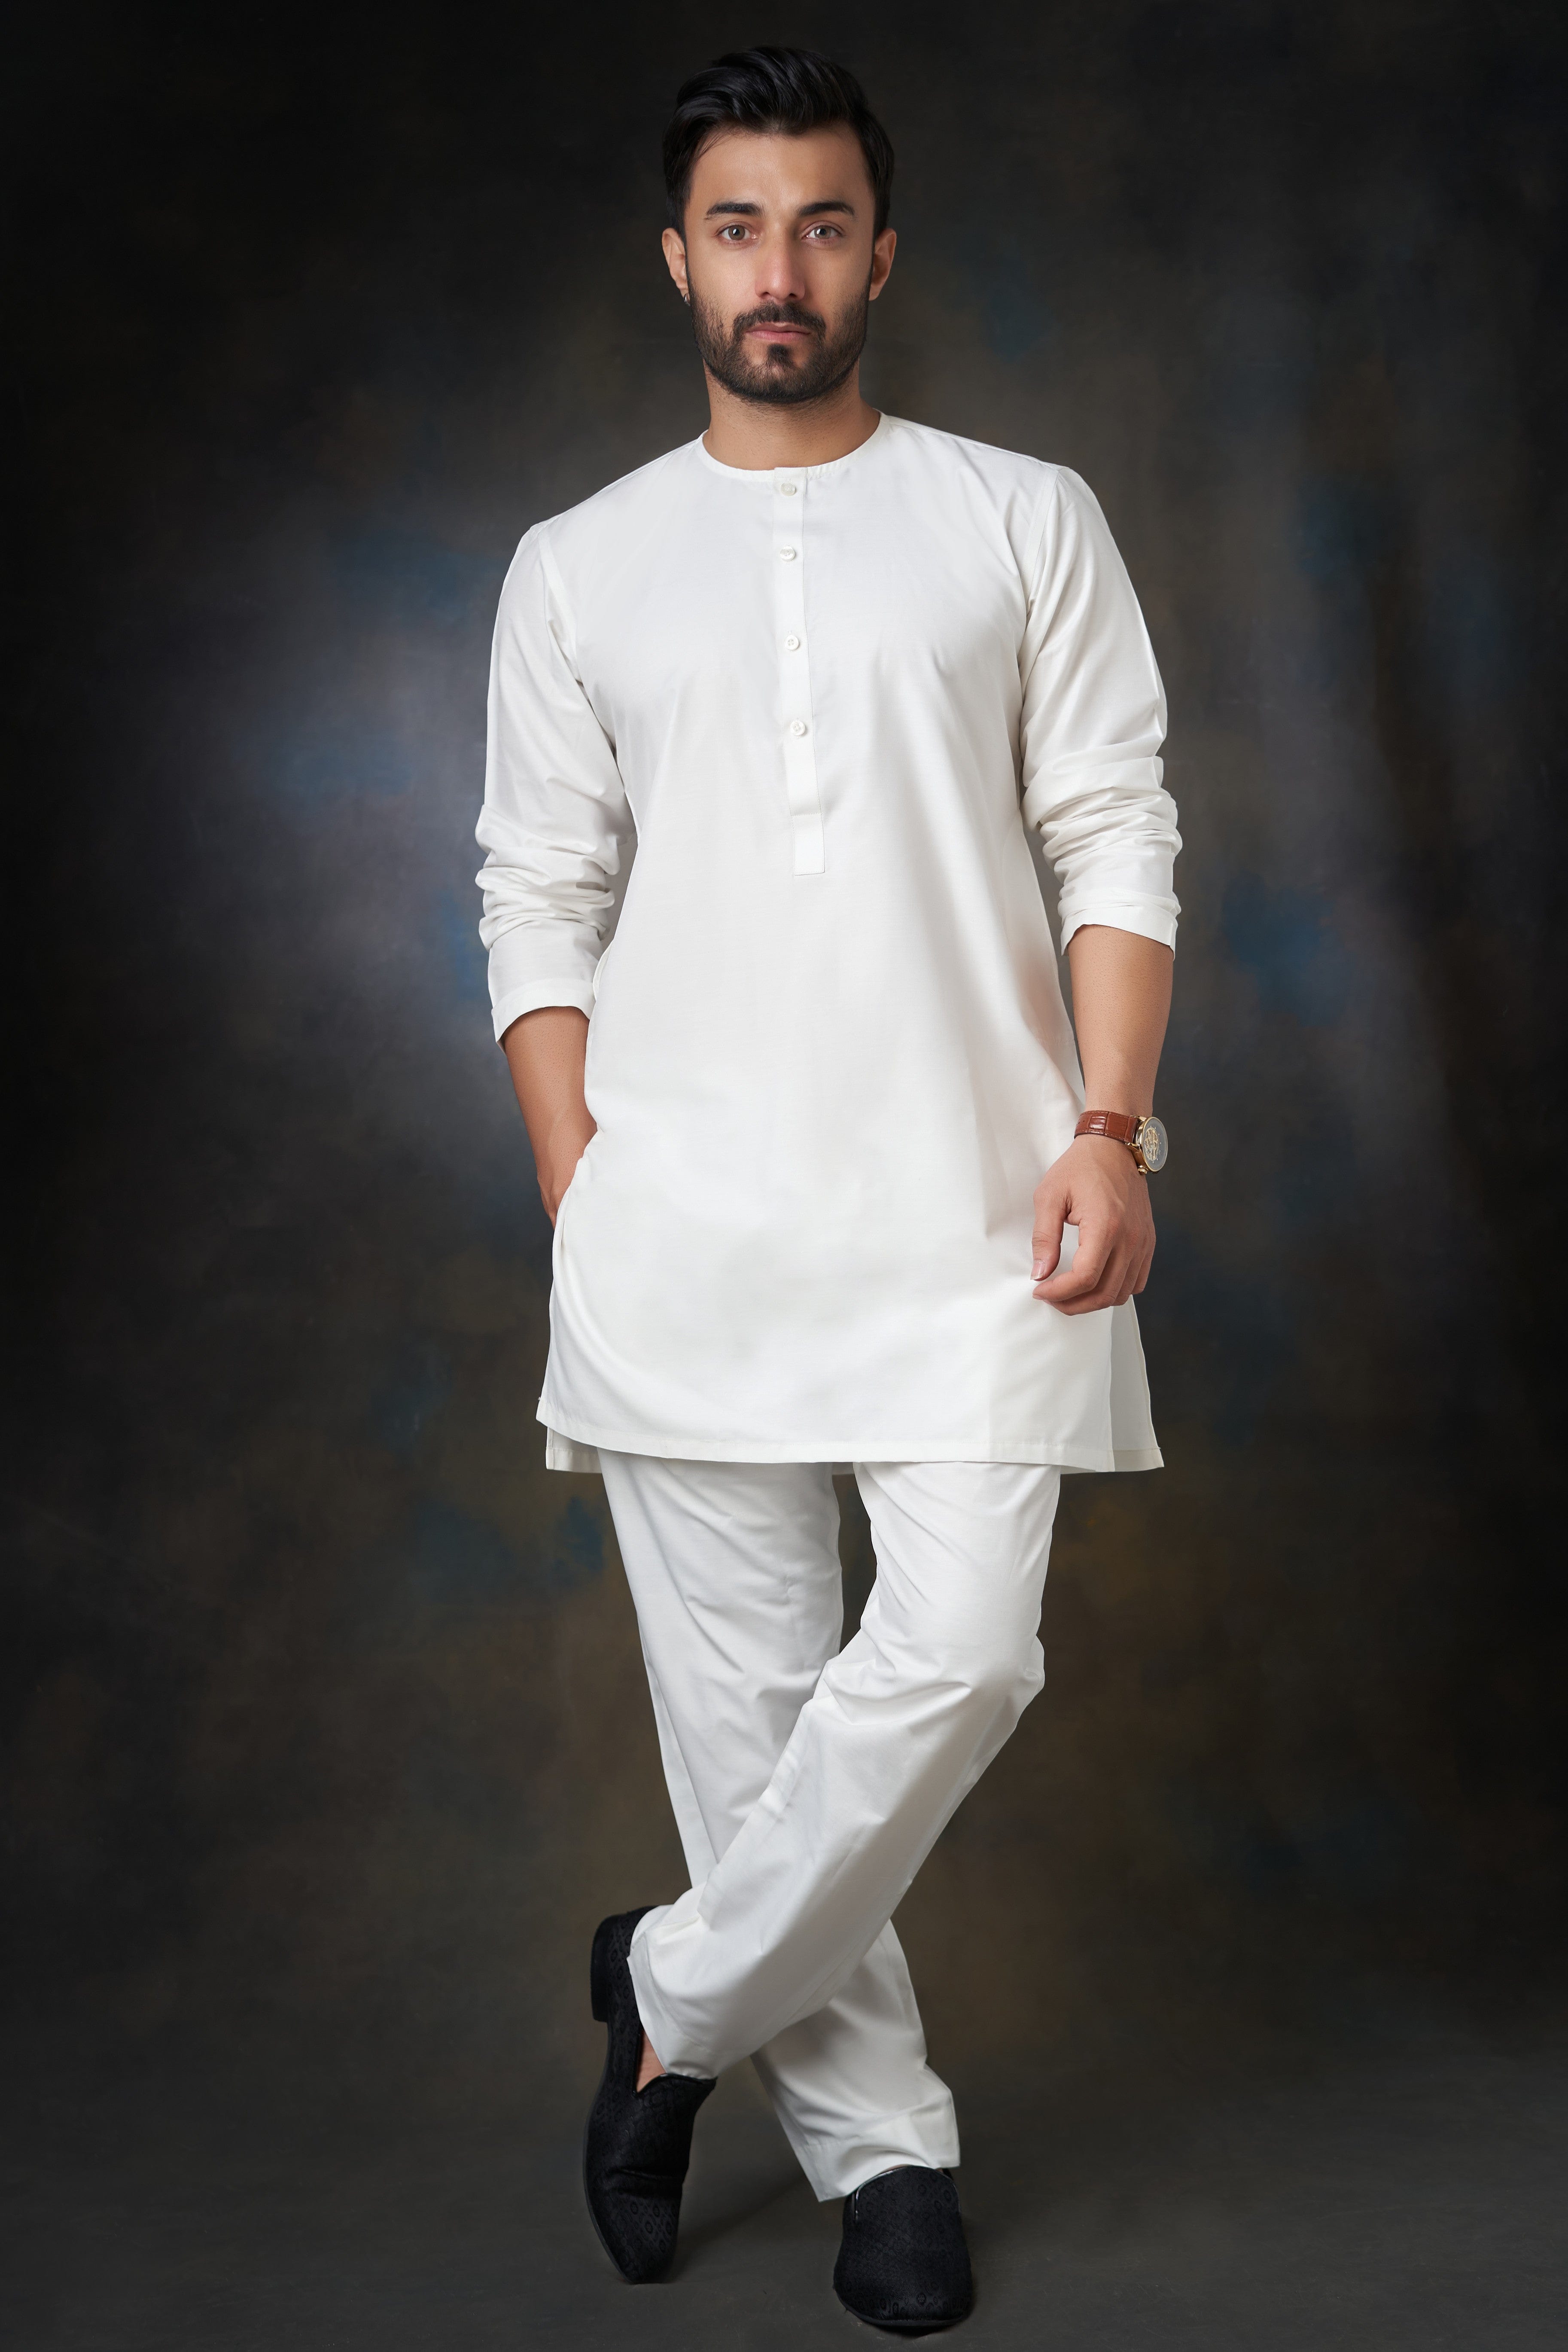 Latest Fashion Trends in Men's Sherwani and Kurta Pajama - Nihal Fashions  Blog